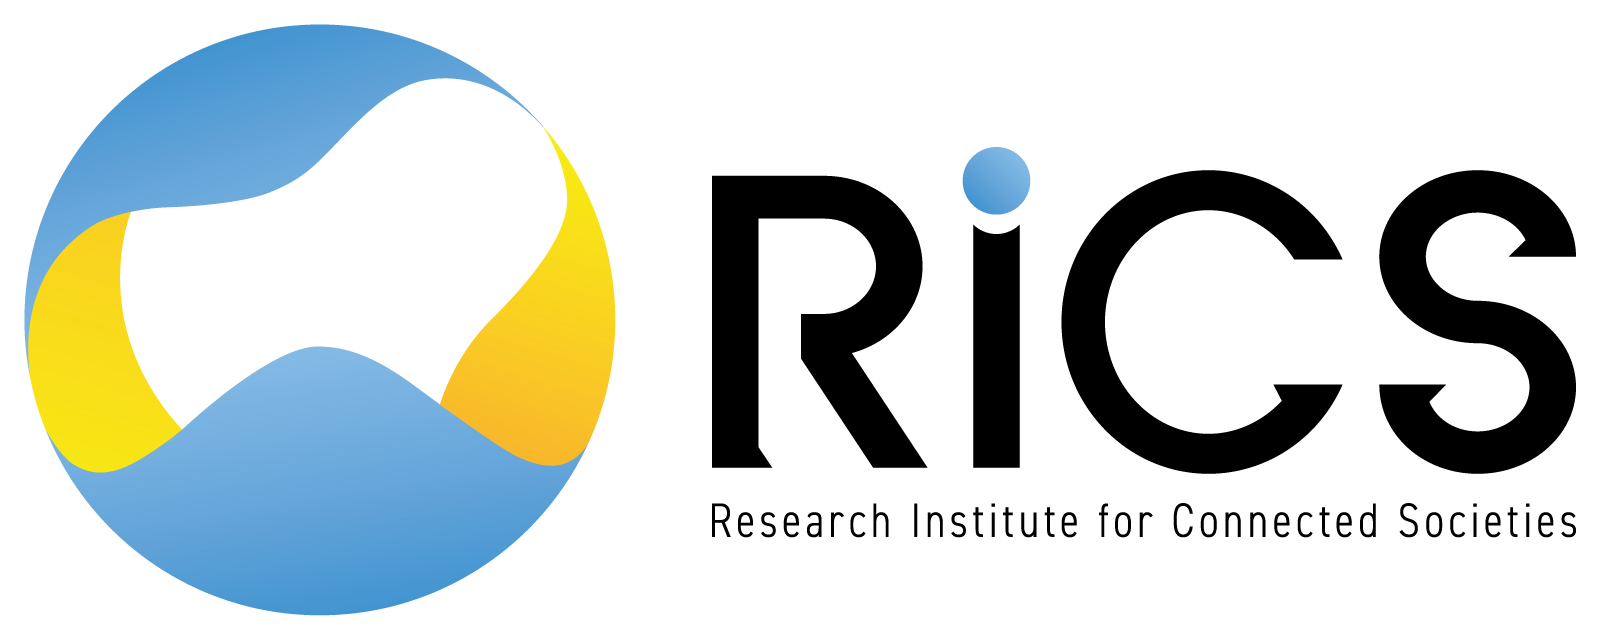 corporate logo